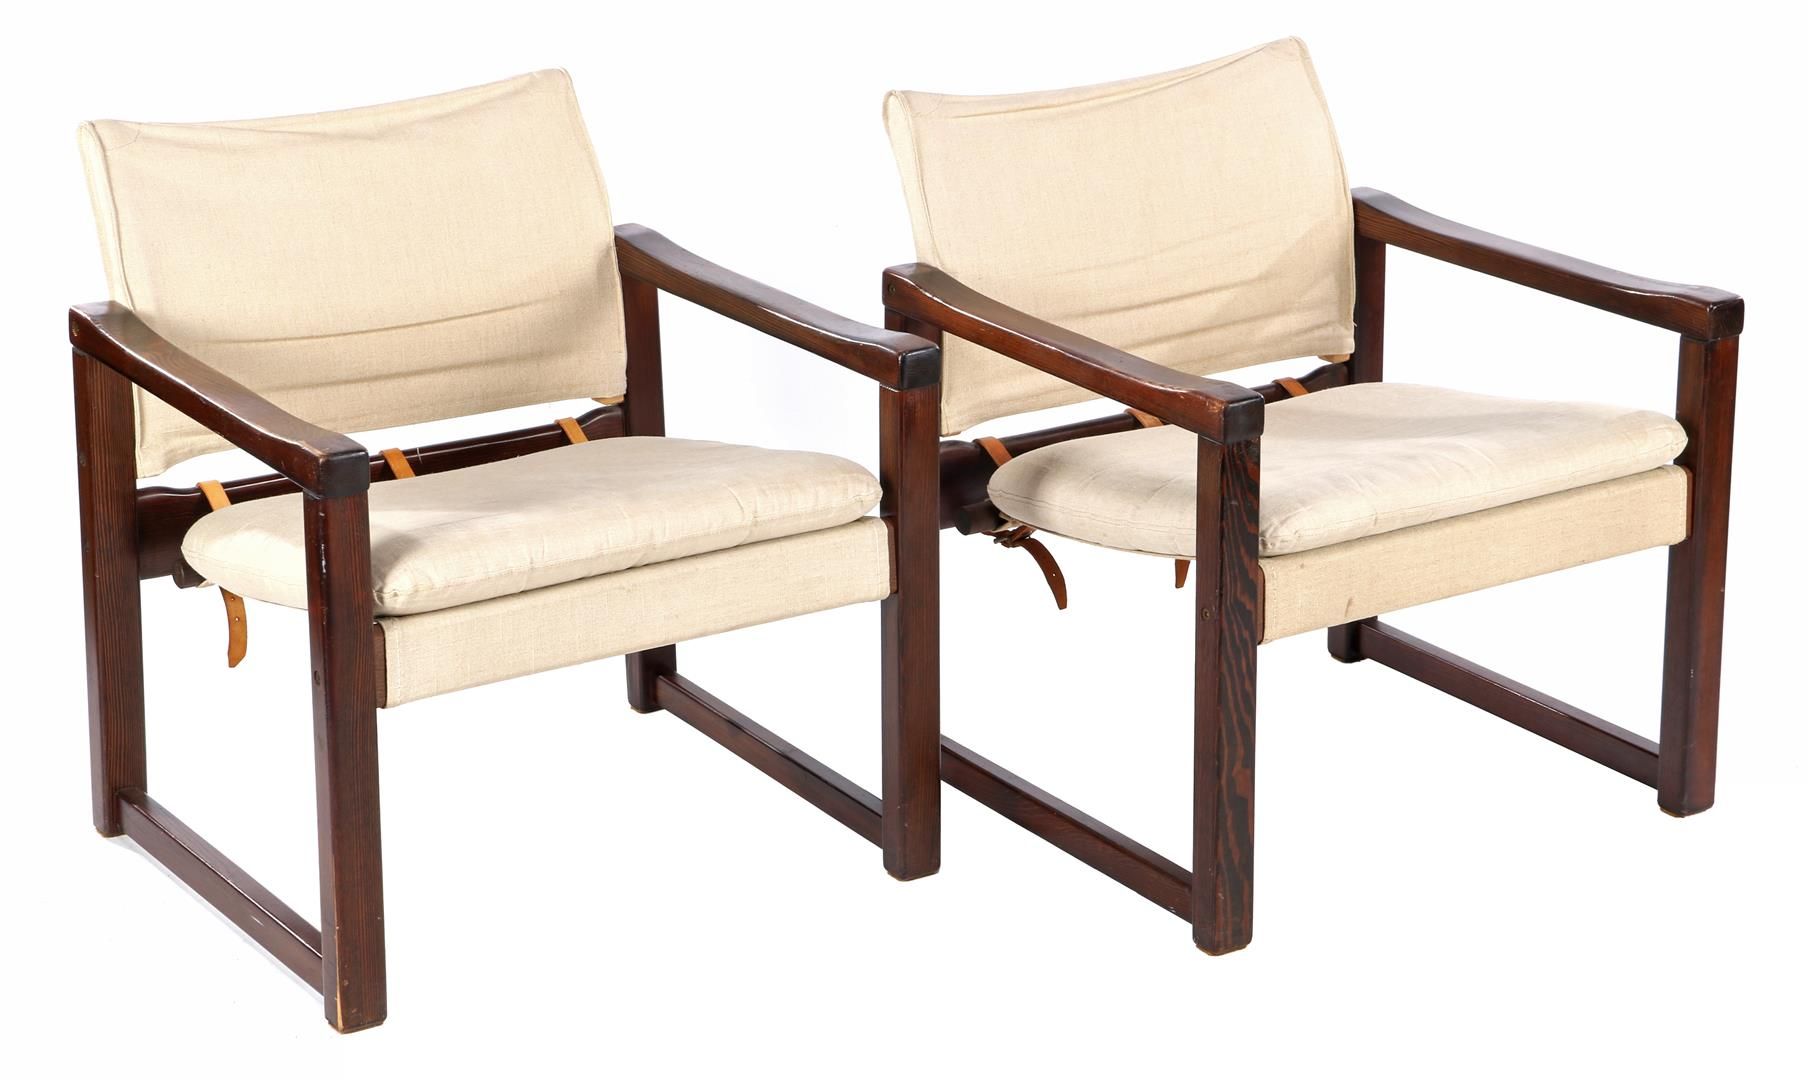 Karin Mobring 卡琳-莫布林(1927-2005)

2把白蜡木扶手椅，带亚麻布套，卡琳-莫布林为宜家设计，型号 "Diana/Safari"，瑞典&hellip;